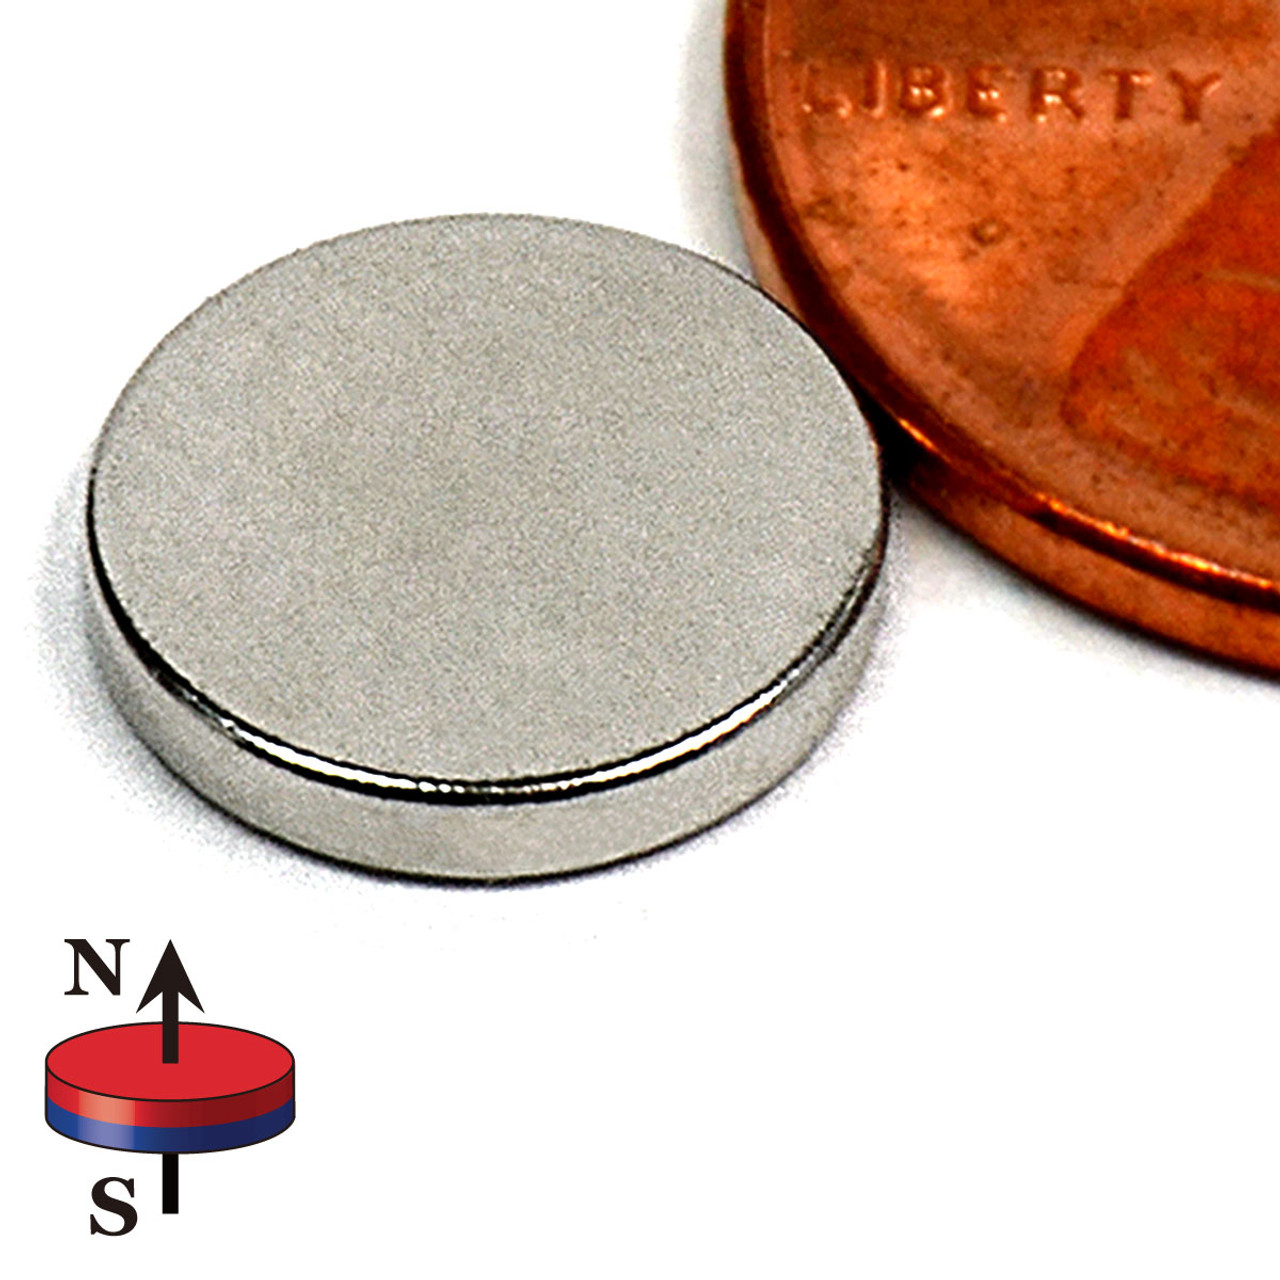 N35 Neodymium Disc Magnet 3/8 x 1/16"